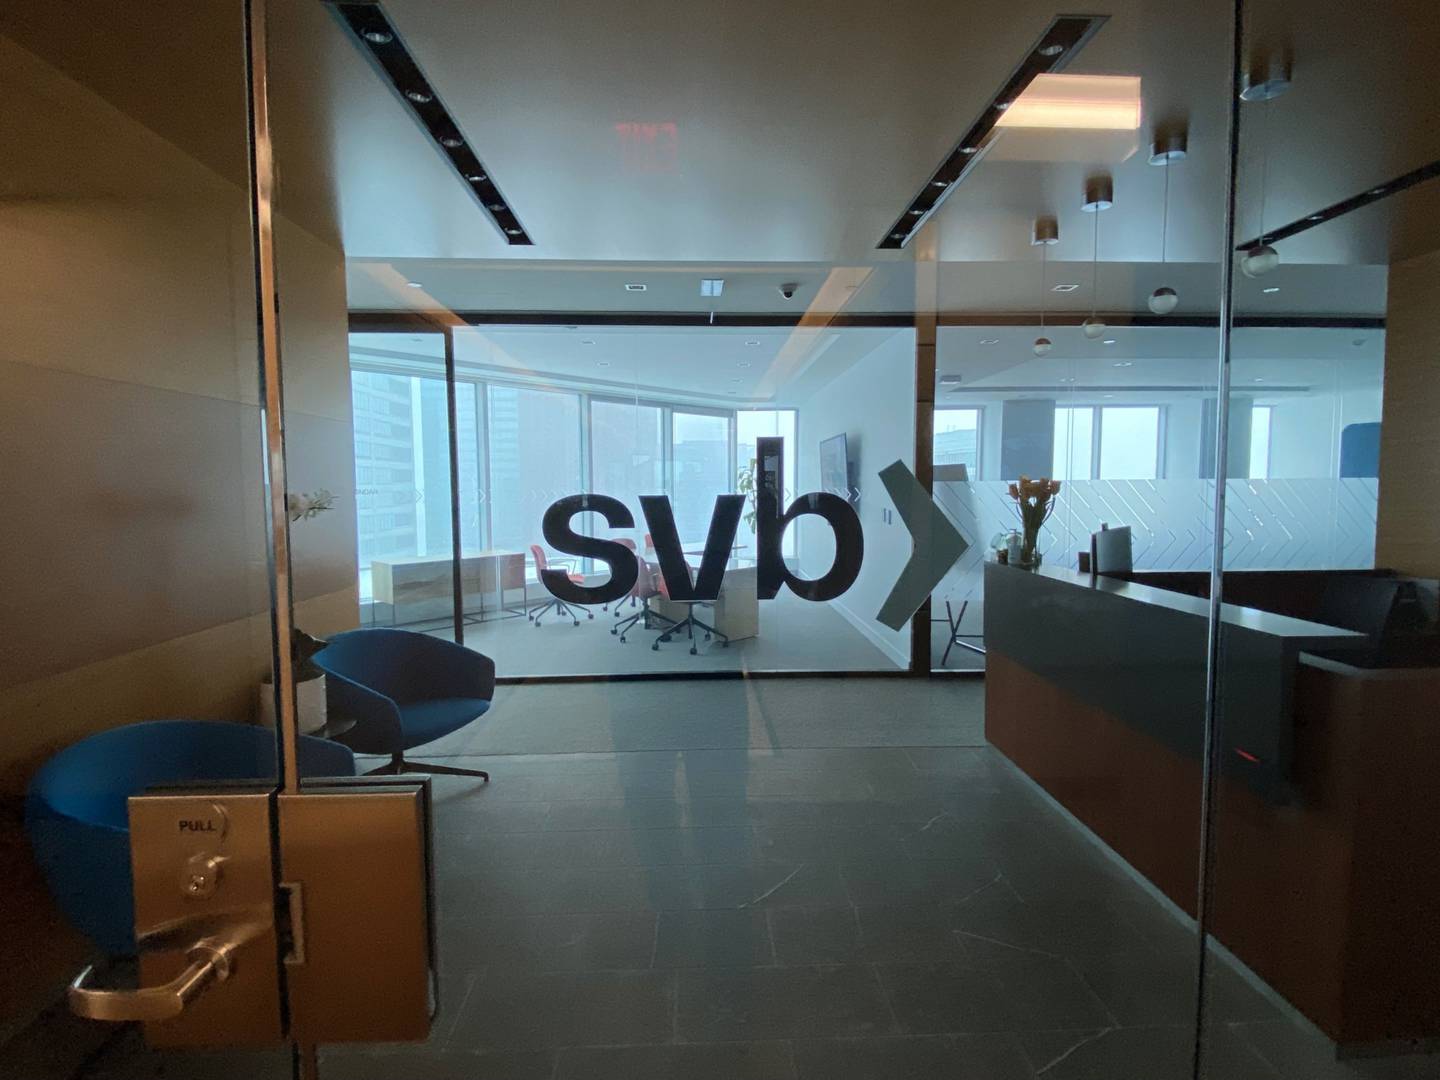 With SVB behind closed doors, entrepreneurs are looking for alternatives to keep their startups running (Derek Decloet/Bloomberg)